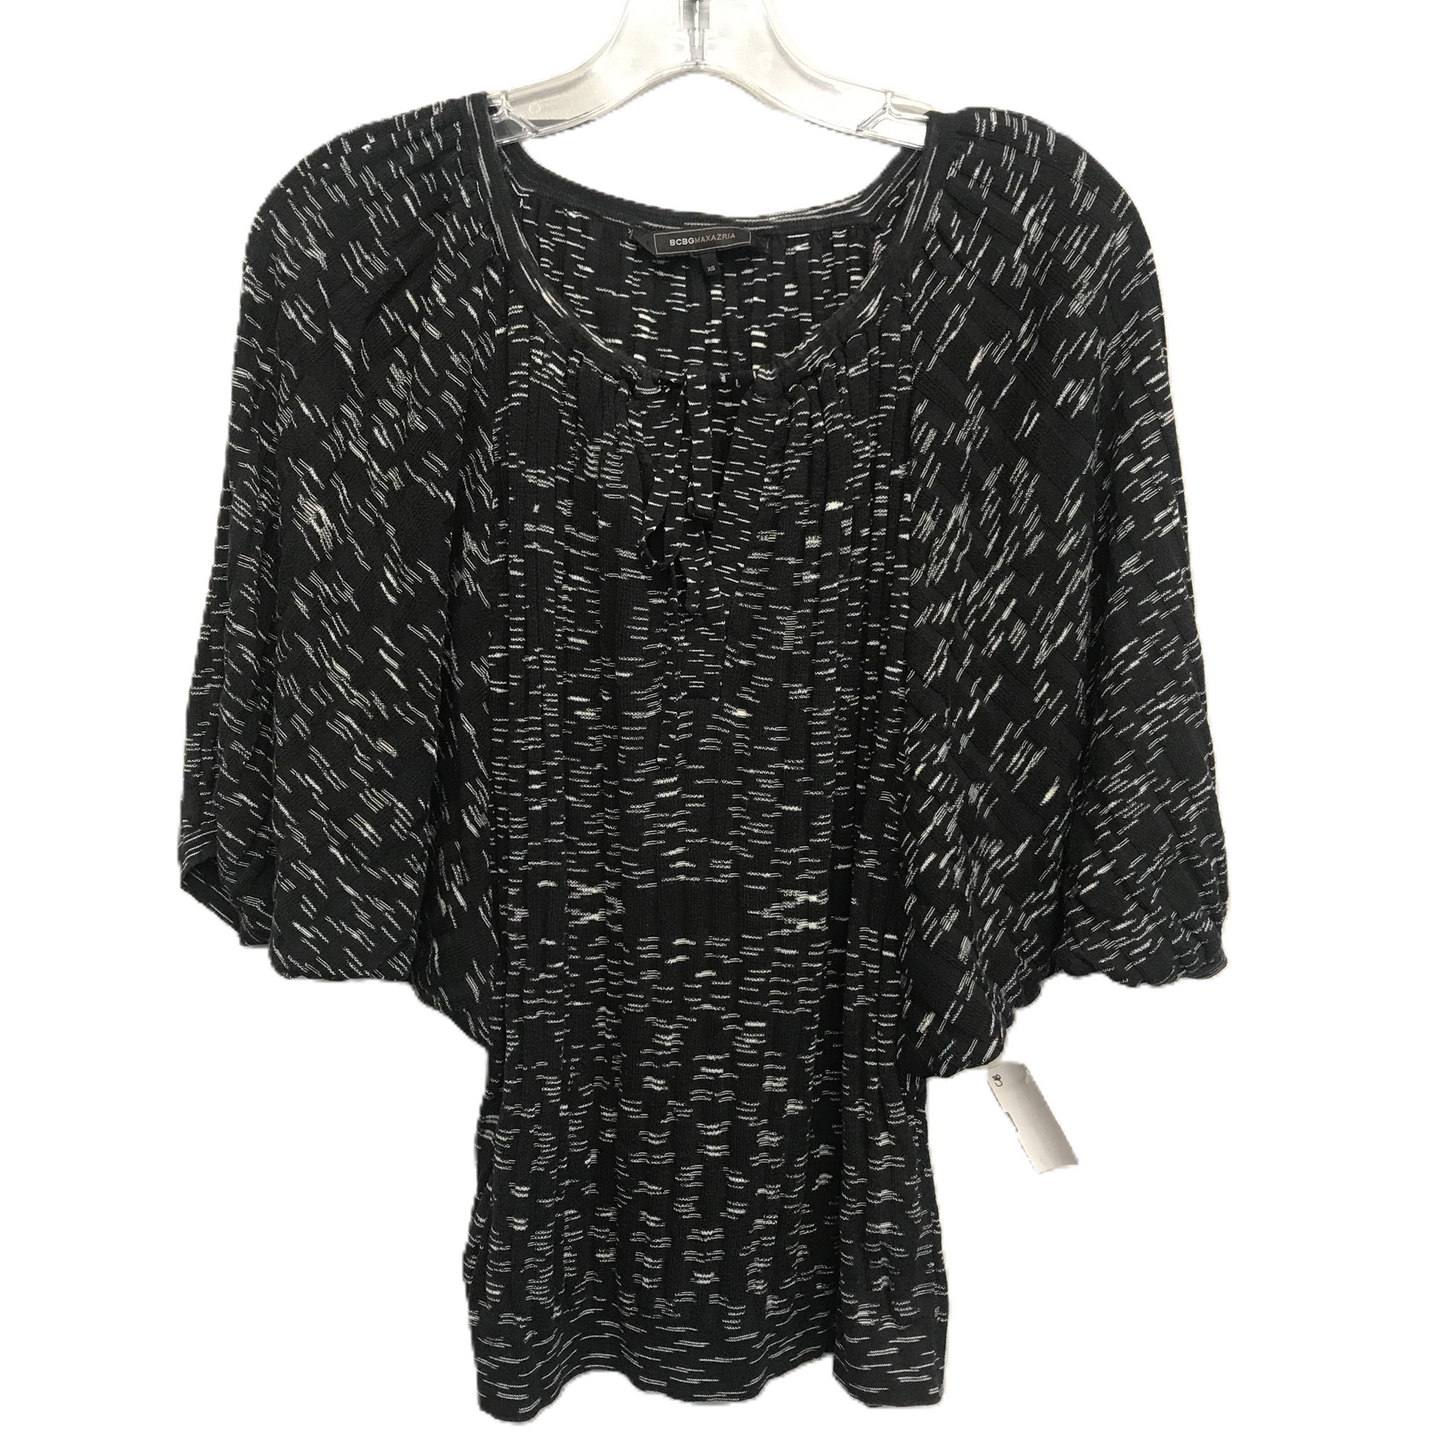 Black & White Top Short Sleeve By Bcbgmaxazria, Size: Xs